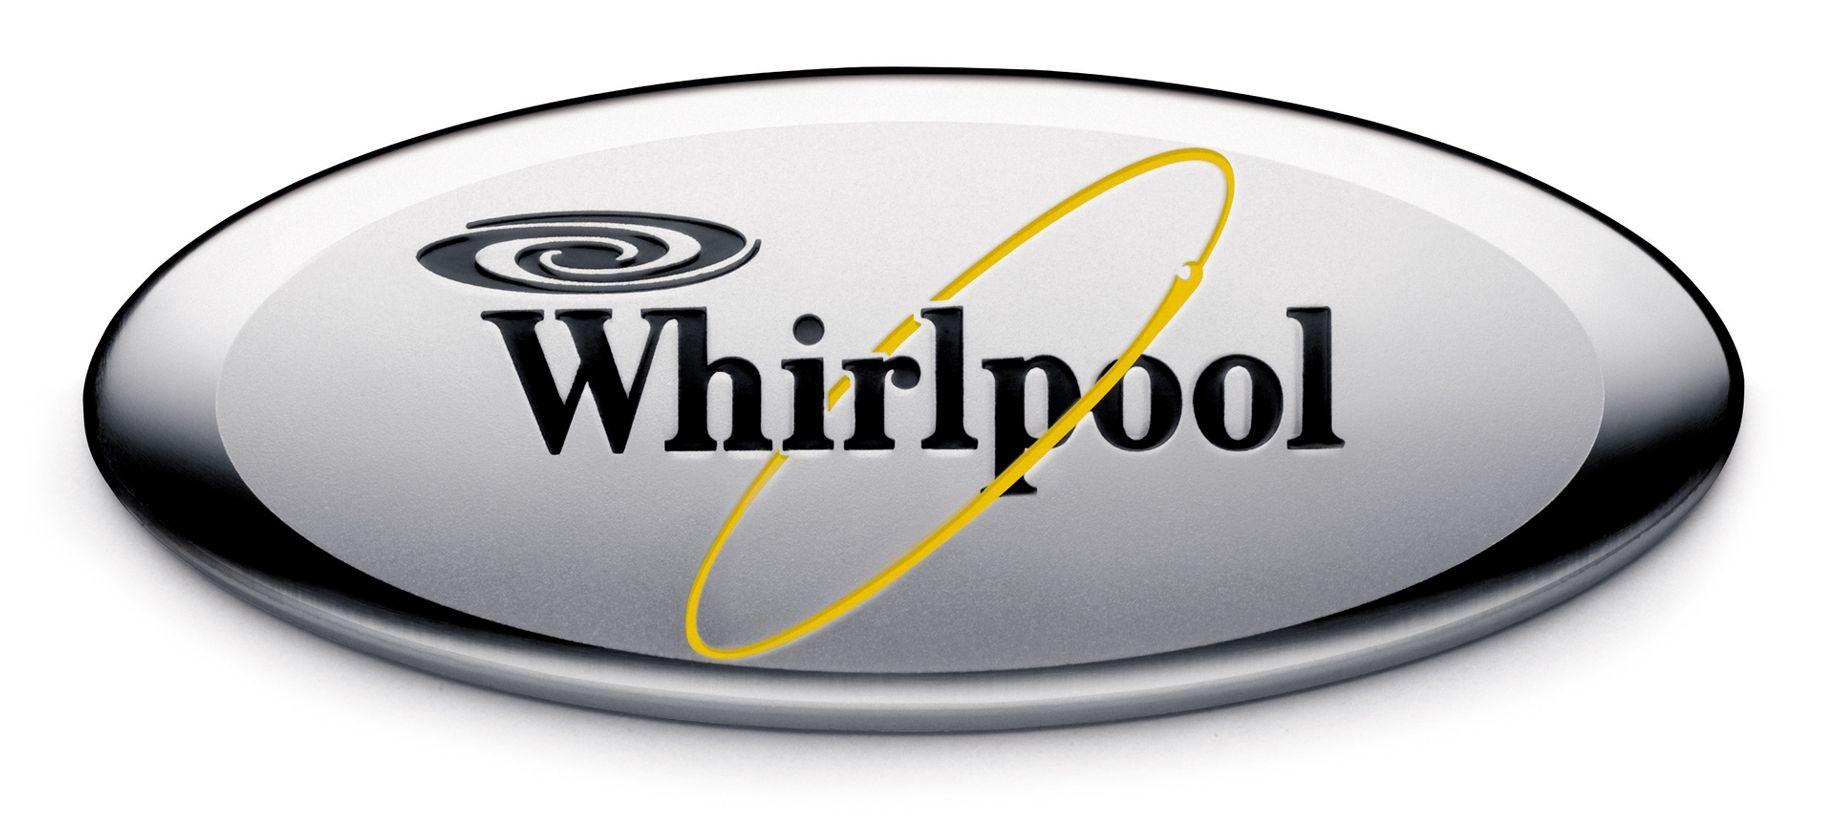 Whirpool Logo - Whirlpool logo « Logos of brands